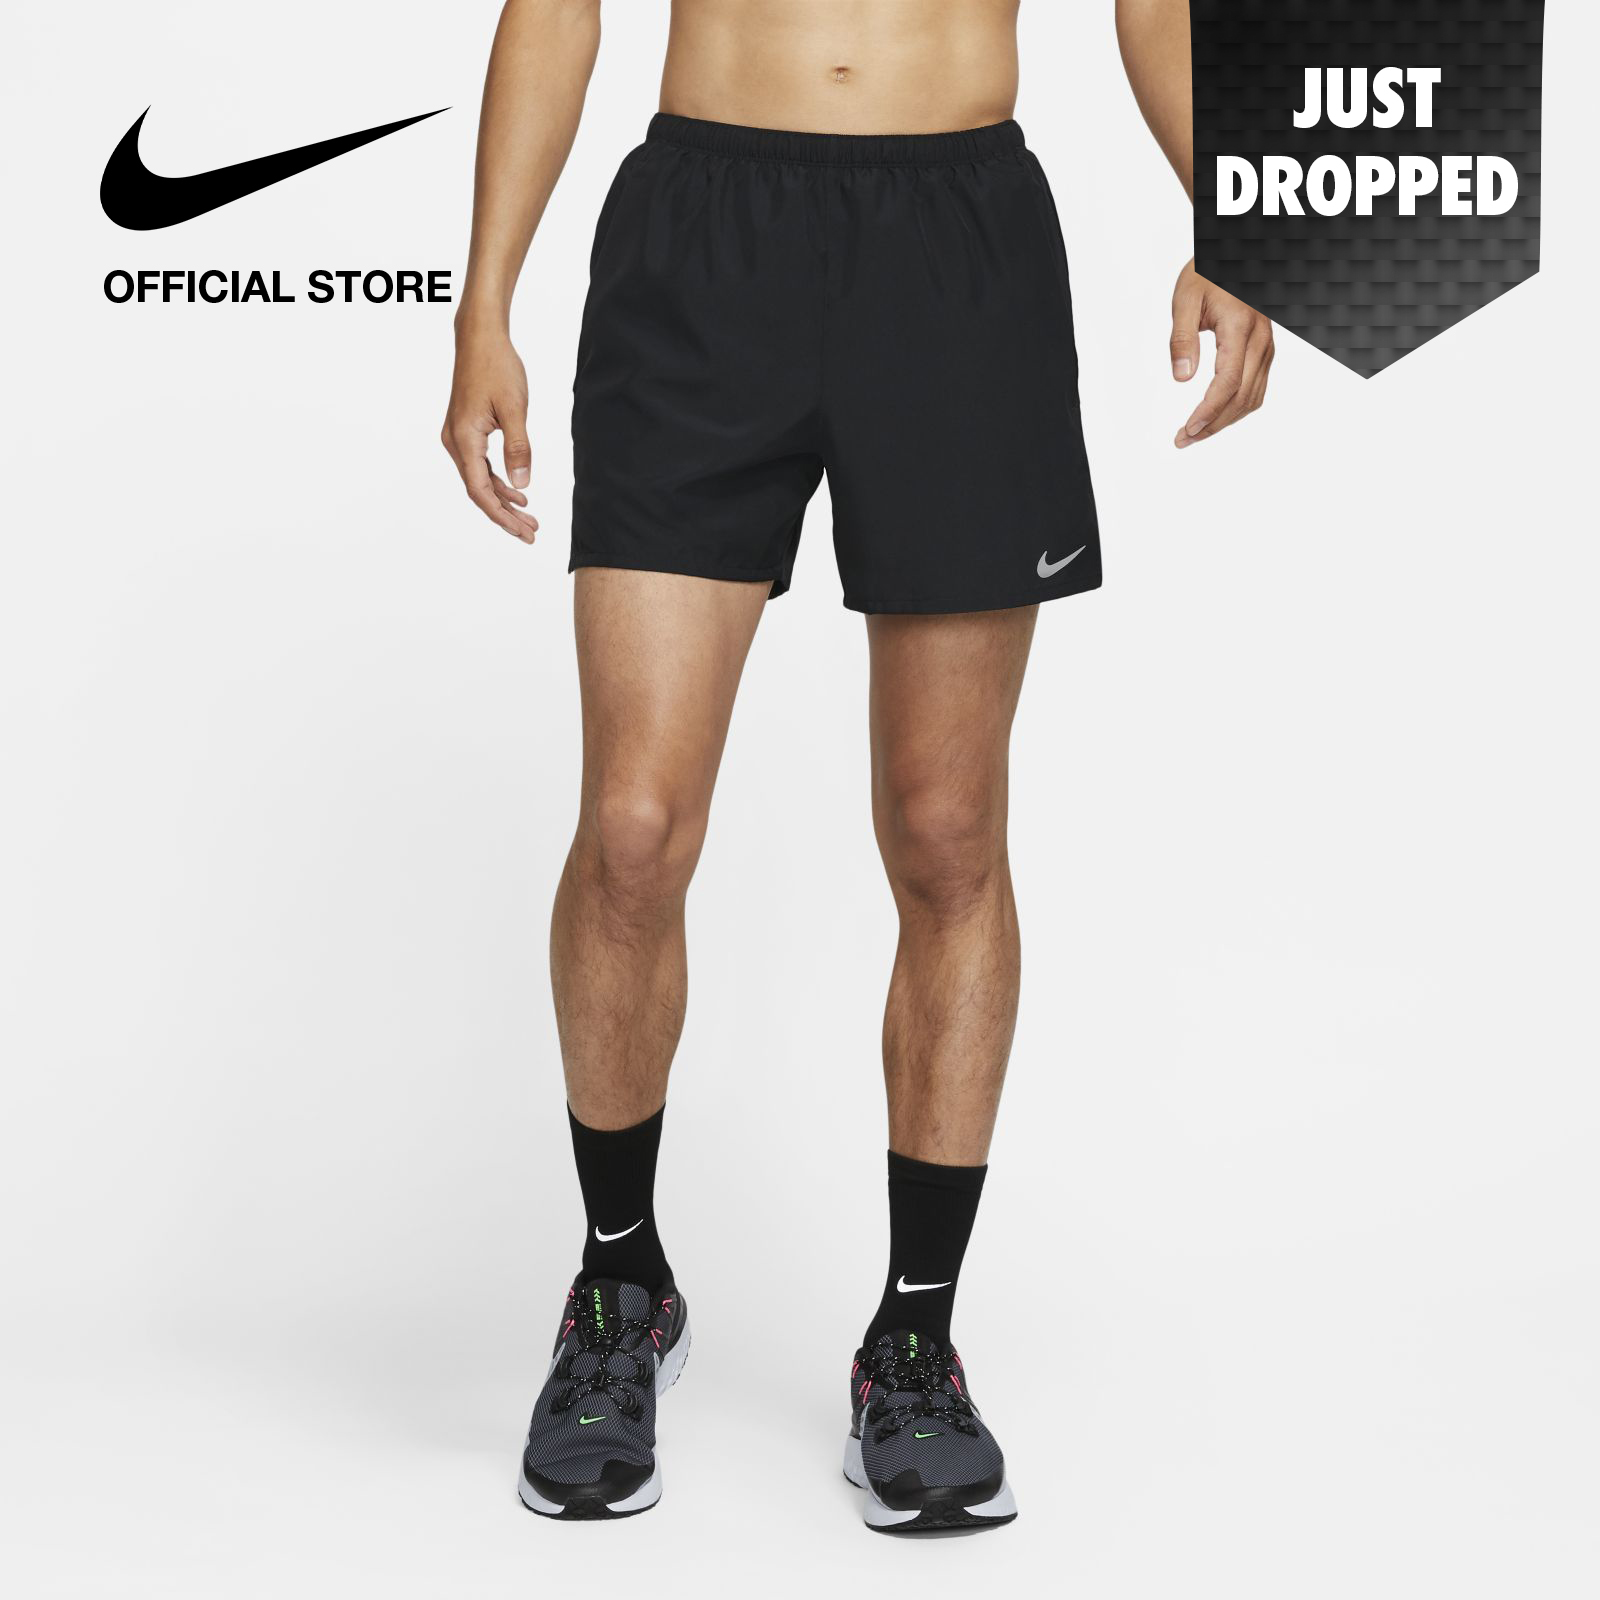 Nike Men's Challenger Running Shorts - Black ไนกี้ กางเกงวิ่งขาสั้นผู้ชาย ชาเลนเจอร์ - สีดำ